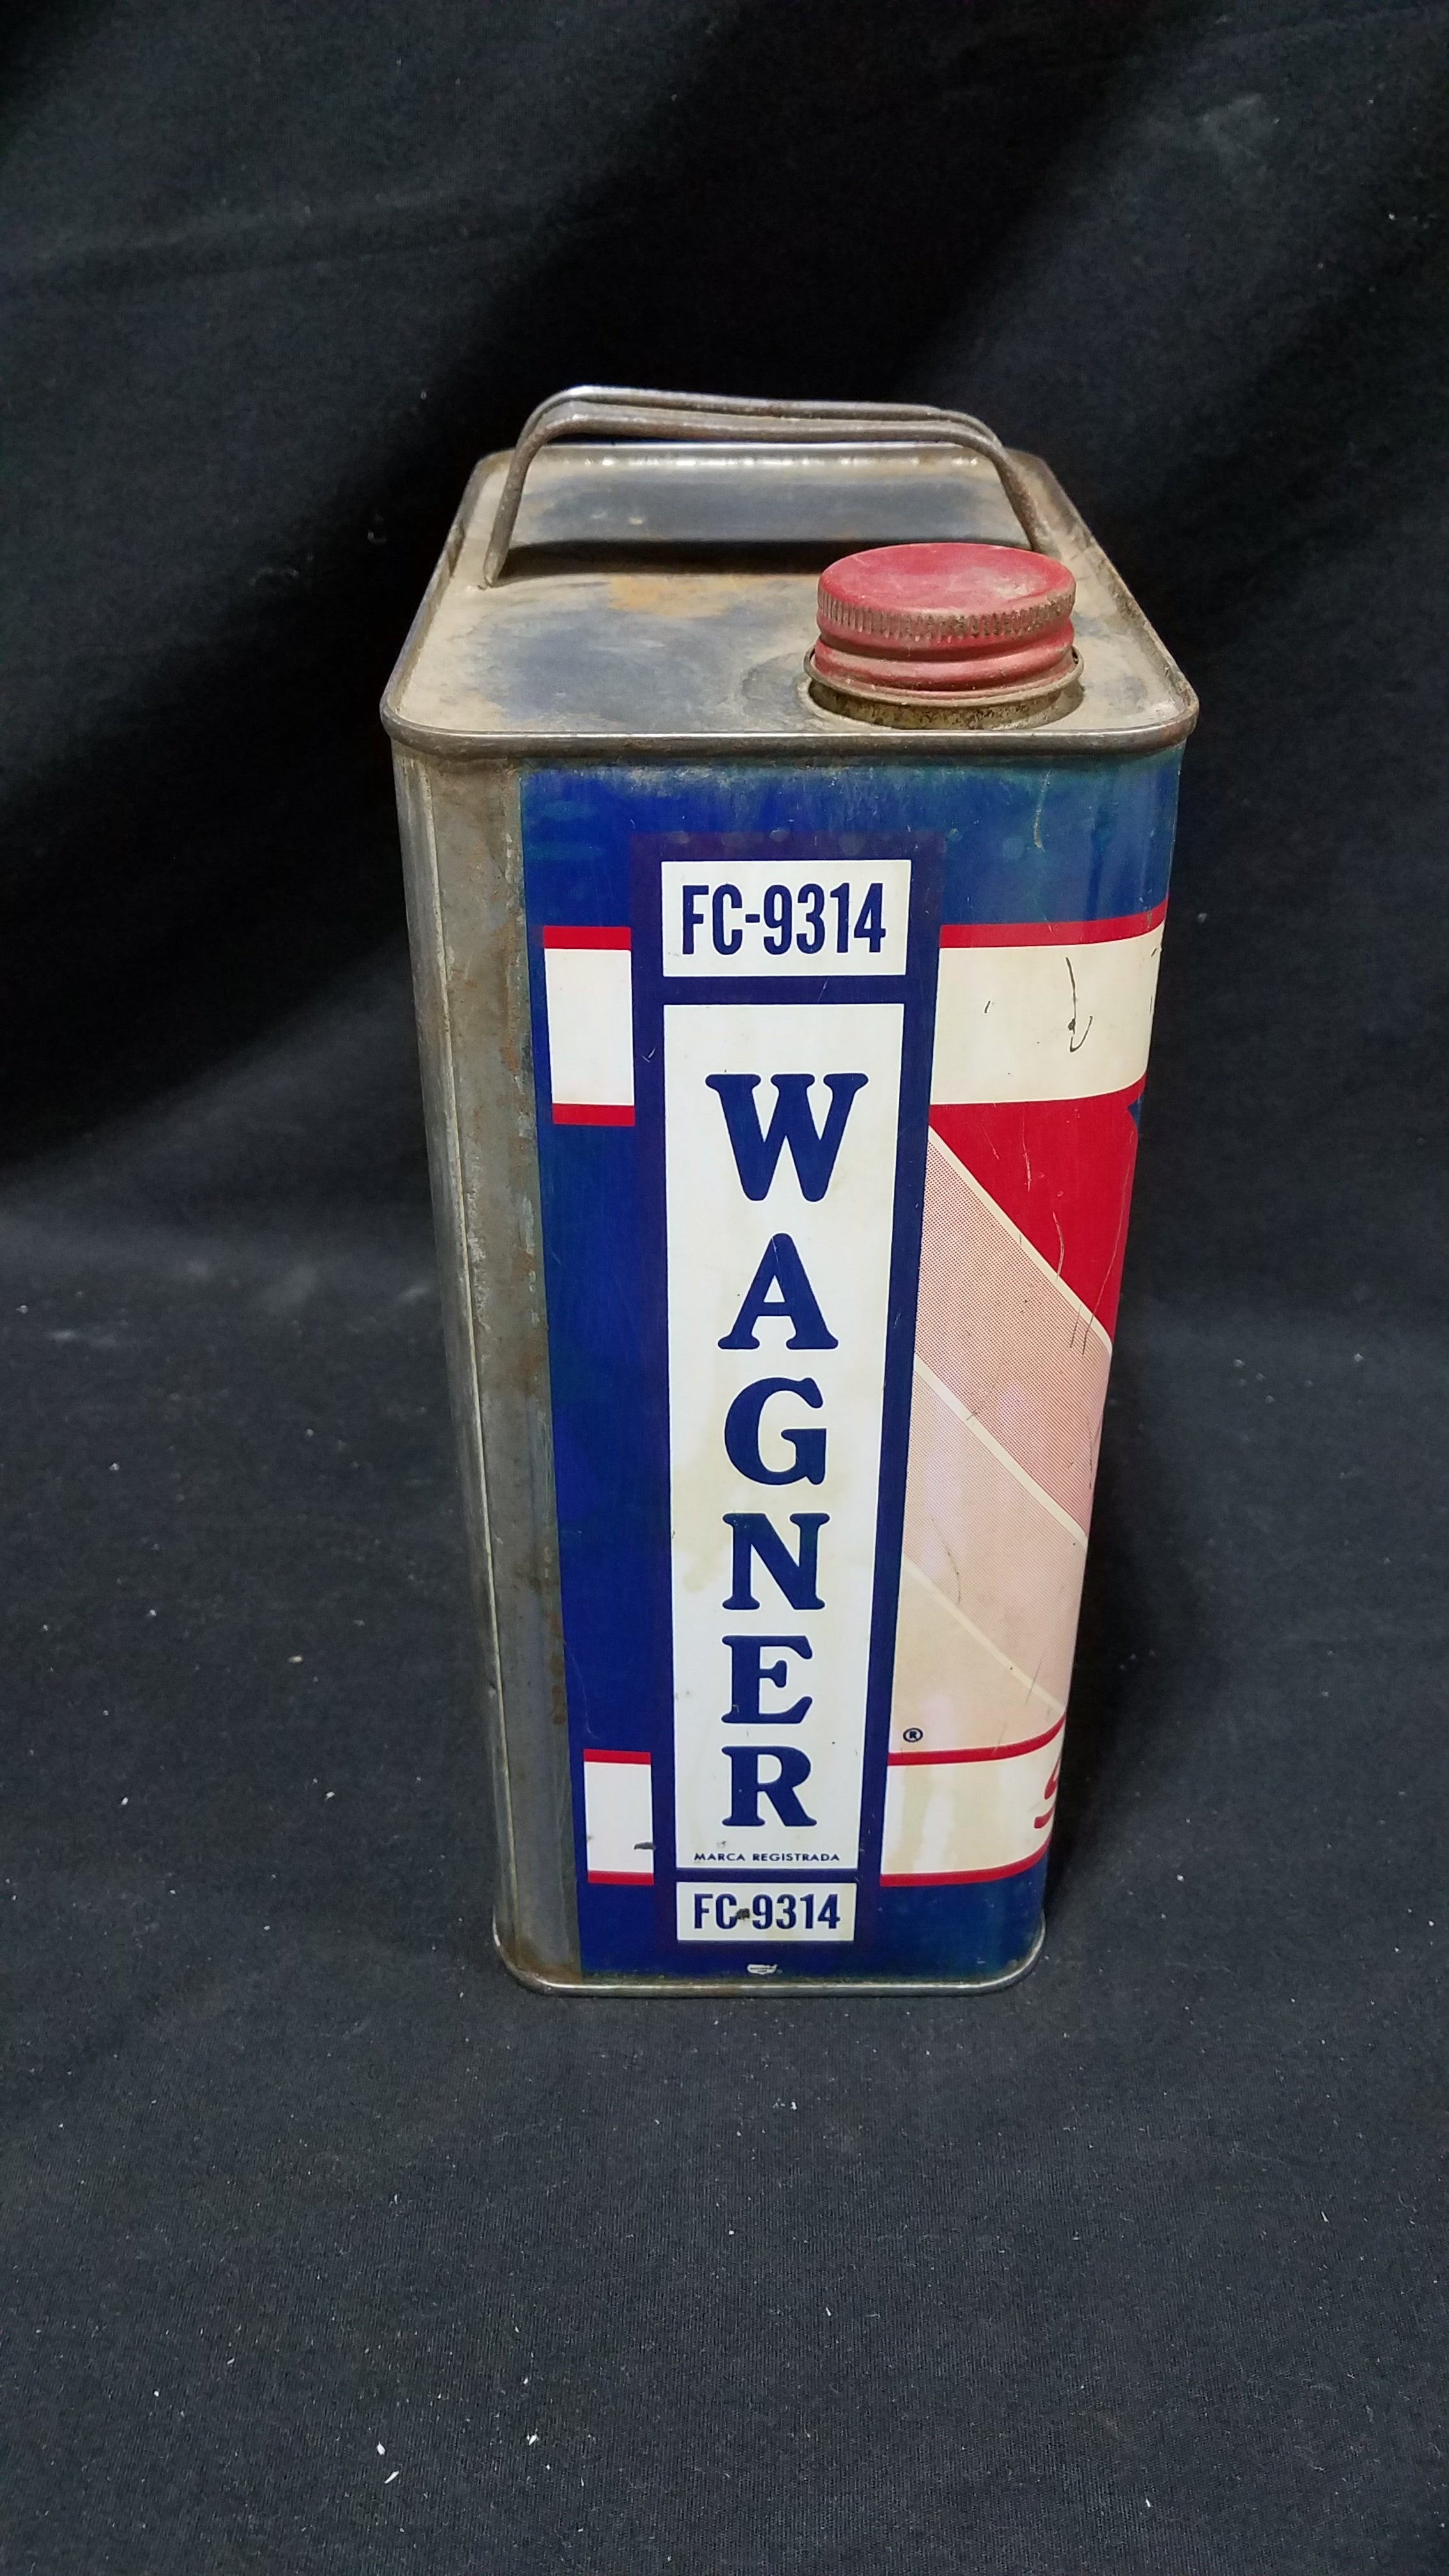 Wagner Lockheed Brake Fluid 1 gallon Can